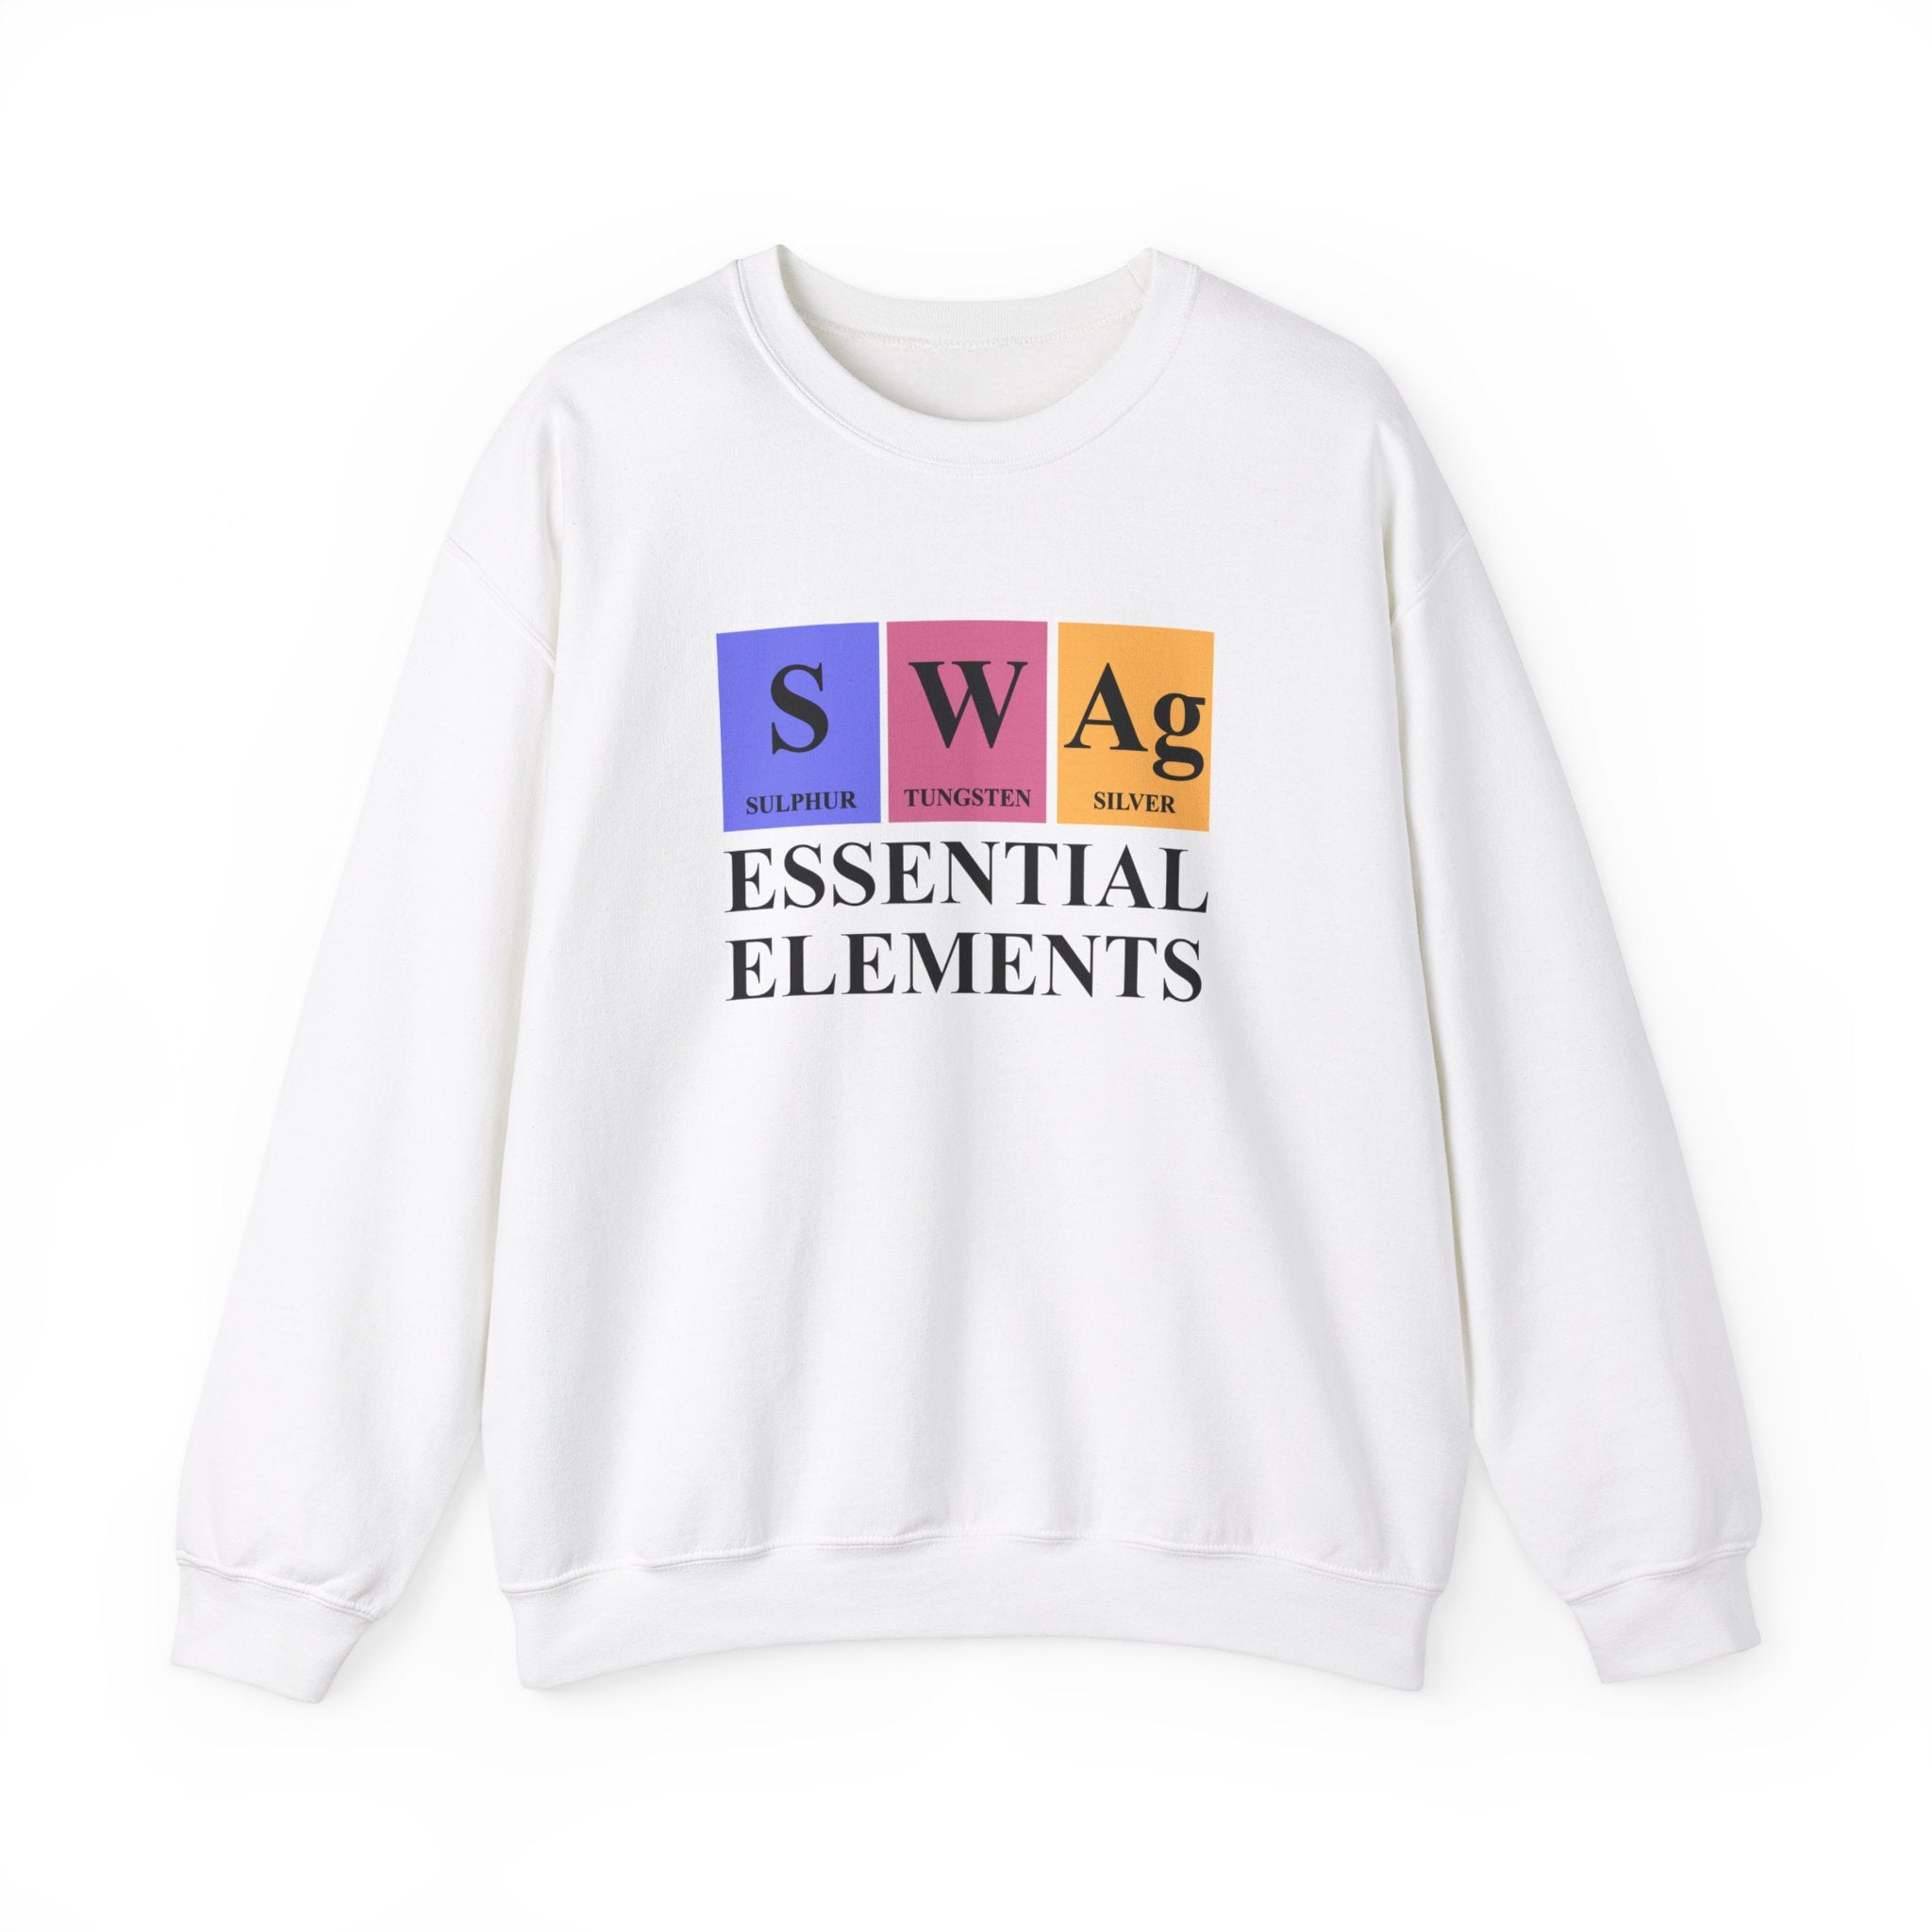 S-W-Ag -  Sweatshirt